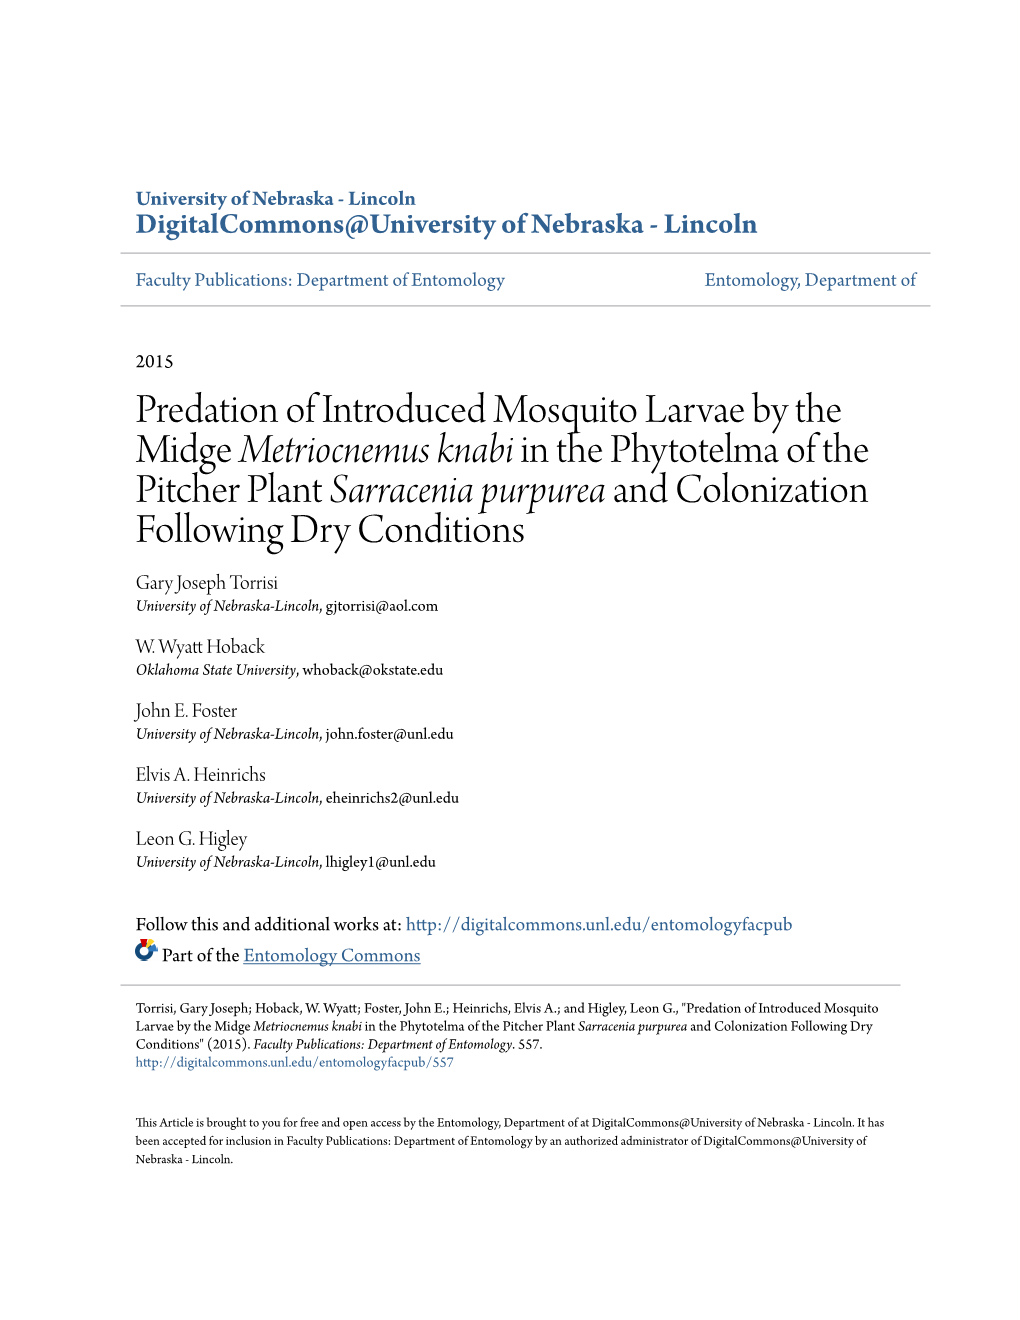 Predation of Introduced Mosquito Larvae by the Midge Metriocnemus